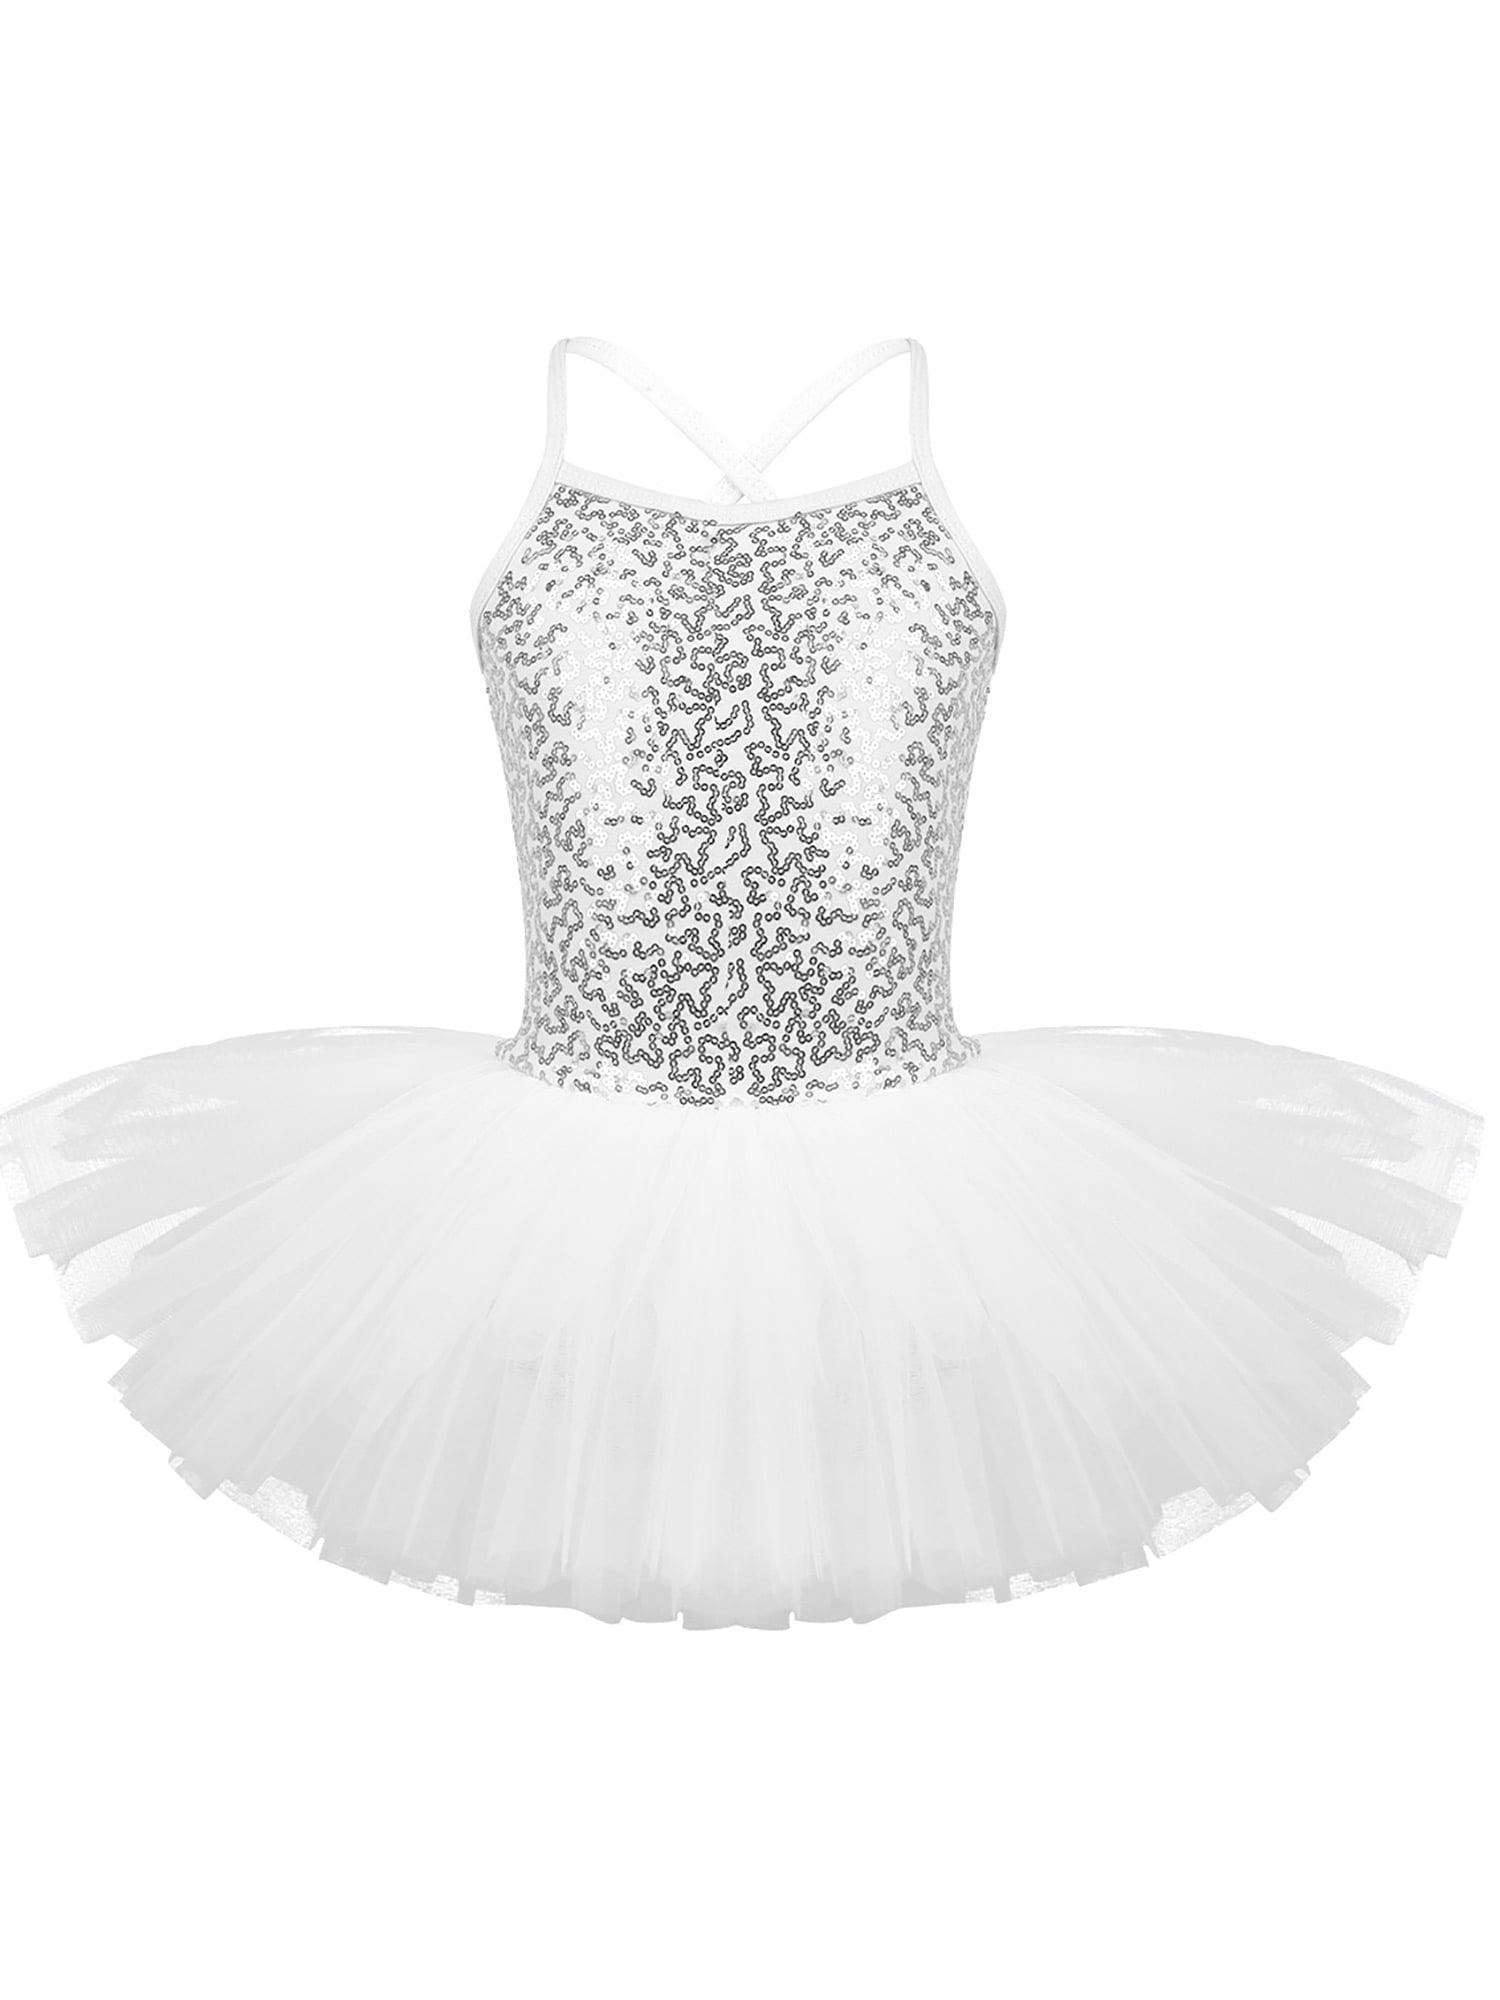 Girls Ballet Dance Dress Sequins Leotard Gymnastics Tutu Skirt Dancewear Costume 